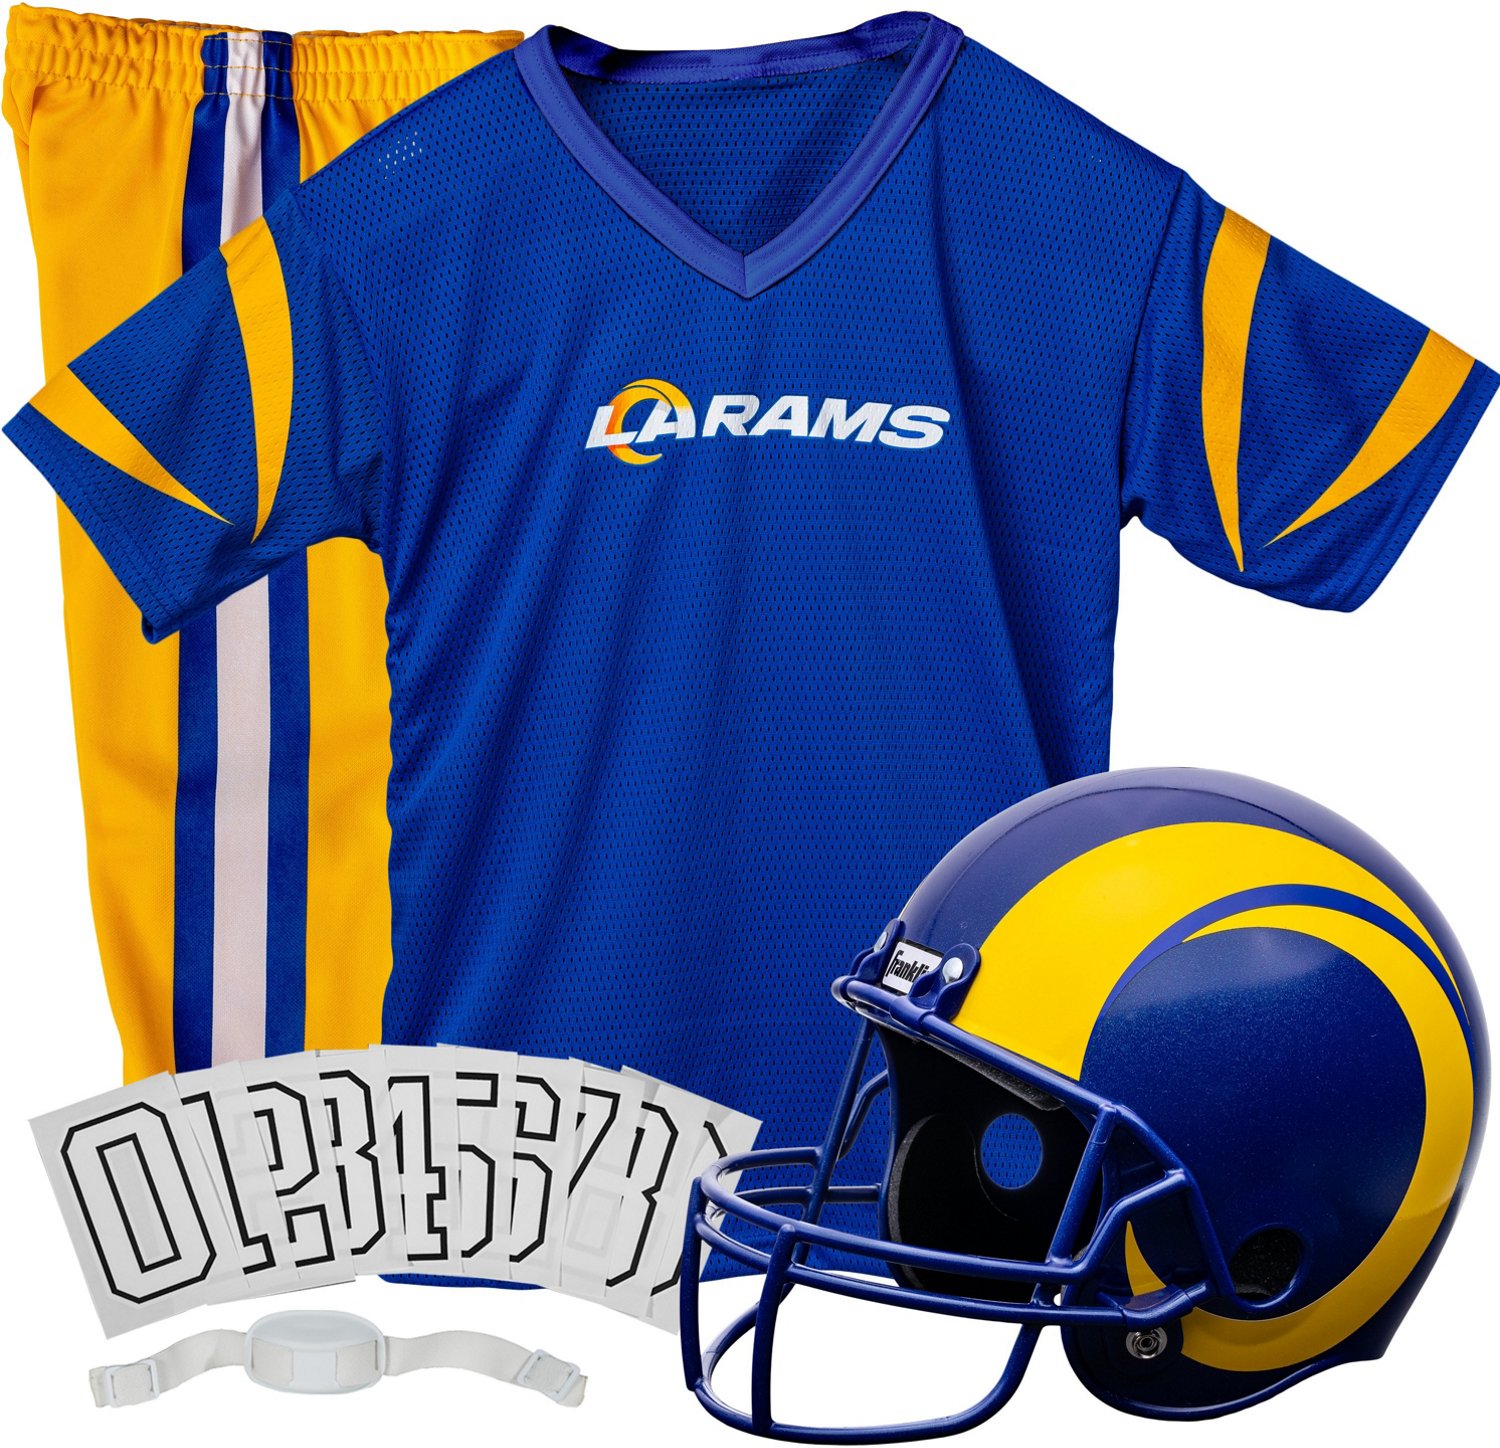 Los Angeles Rams Dress, Rams Cheer Skirt, Dress Jersey